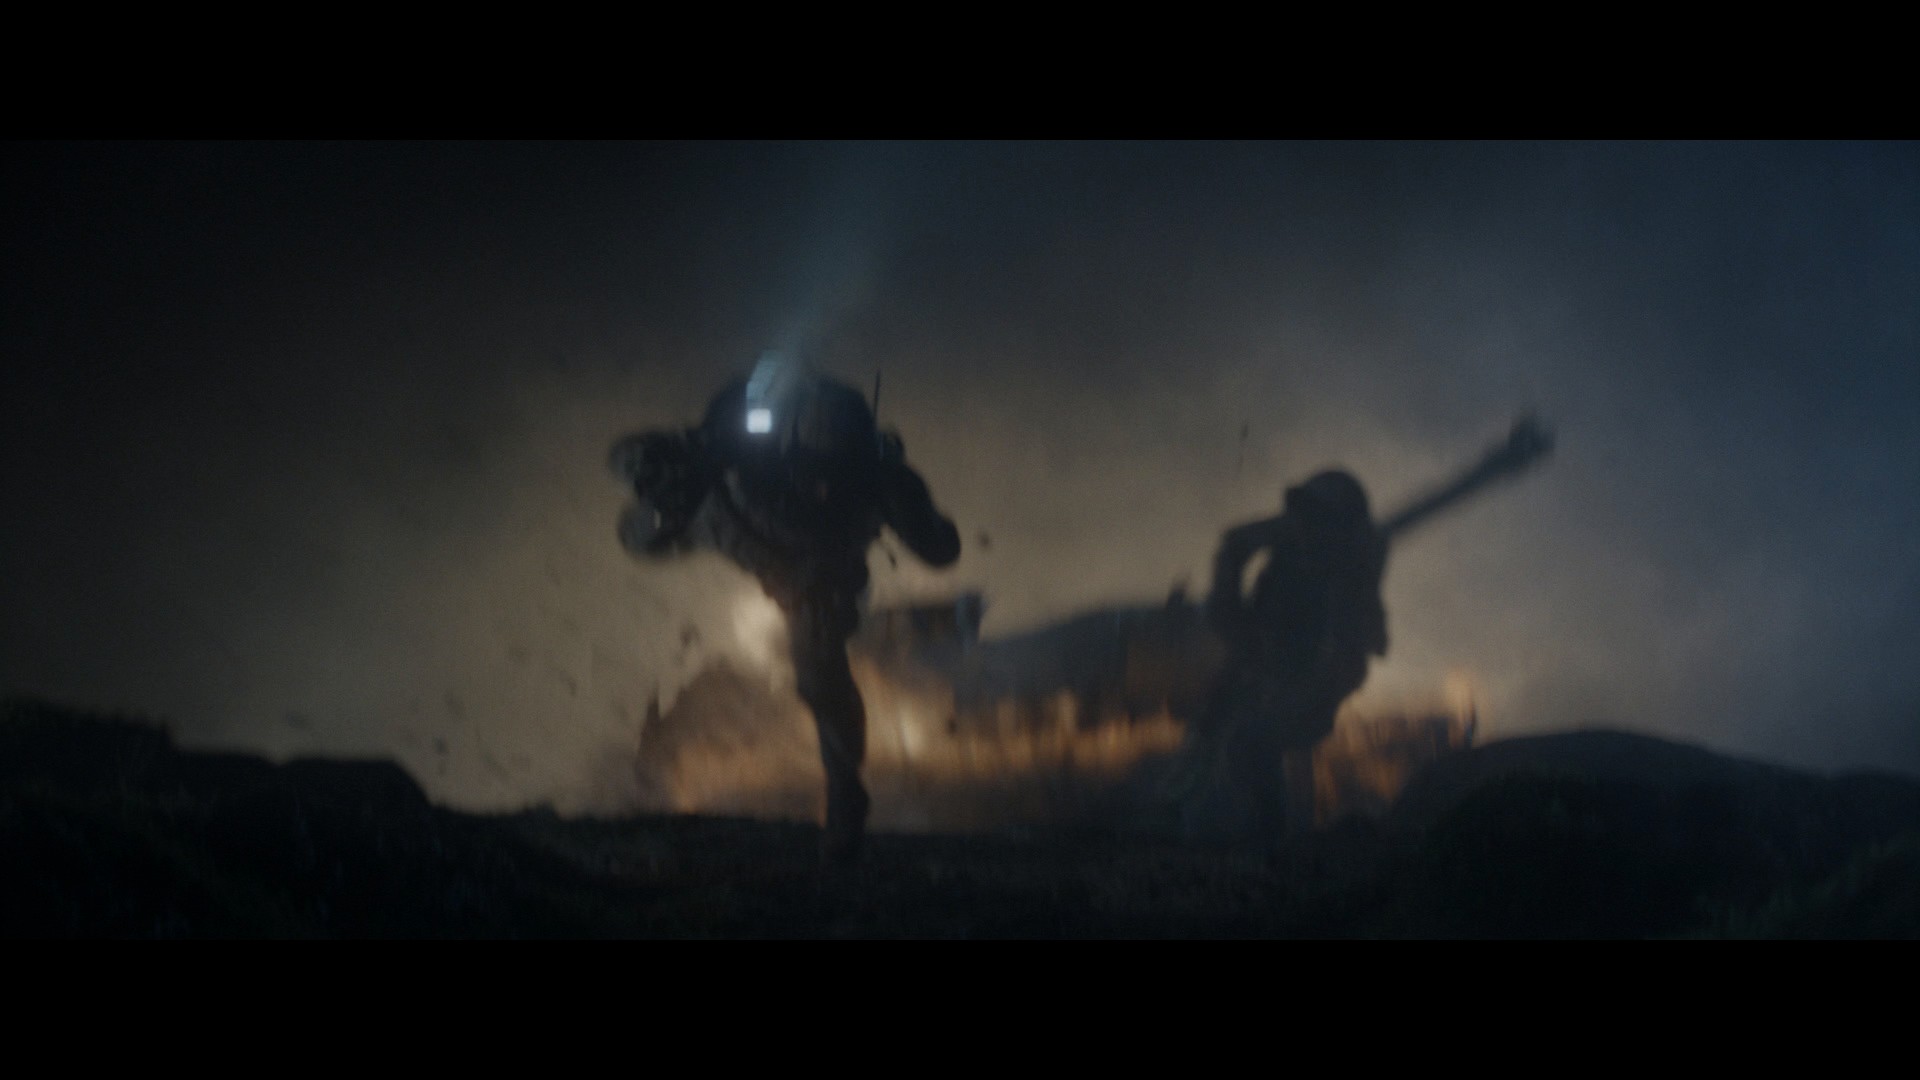 [哥斯拉].Godzilla.2014.3D.GER.BluRay.1080p.AVC.DTS-HD.MA.7.1-HDBEE    41.67G! E5 J- K/ f$ F-8.jpg